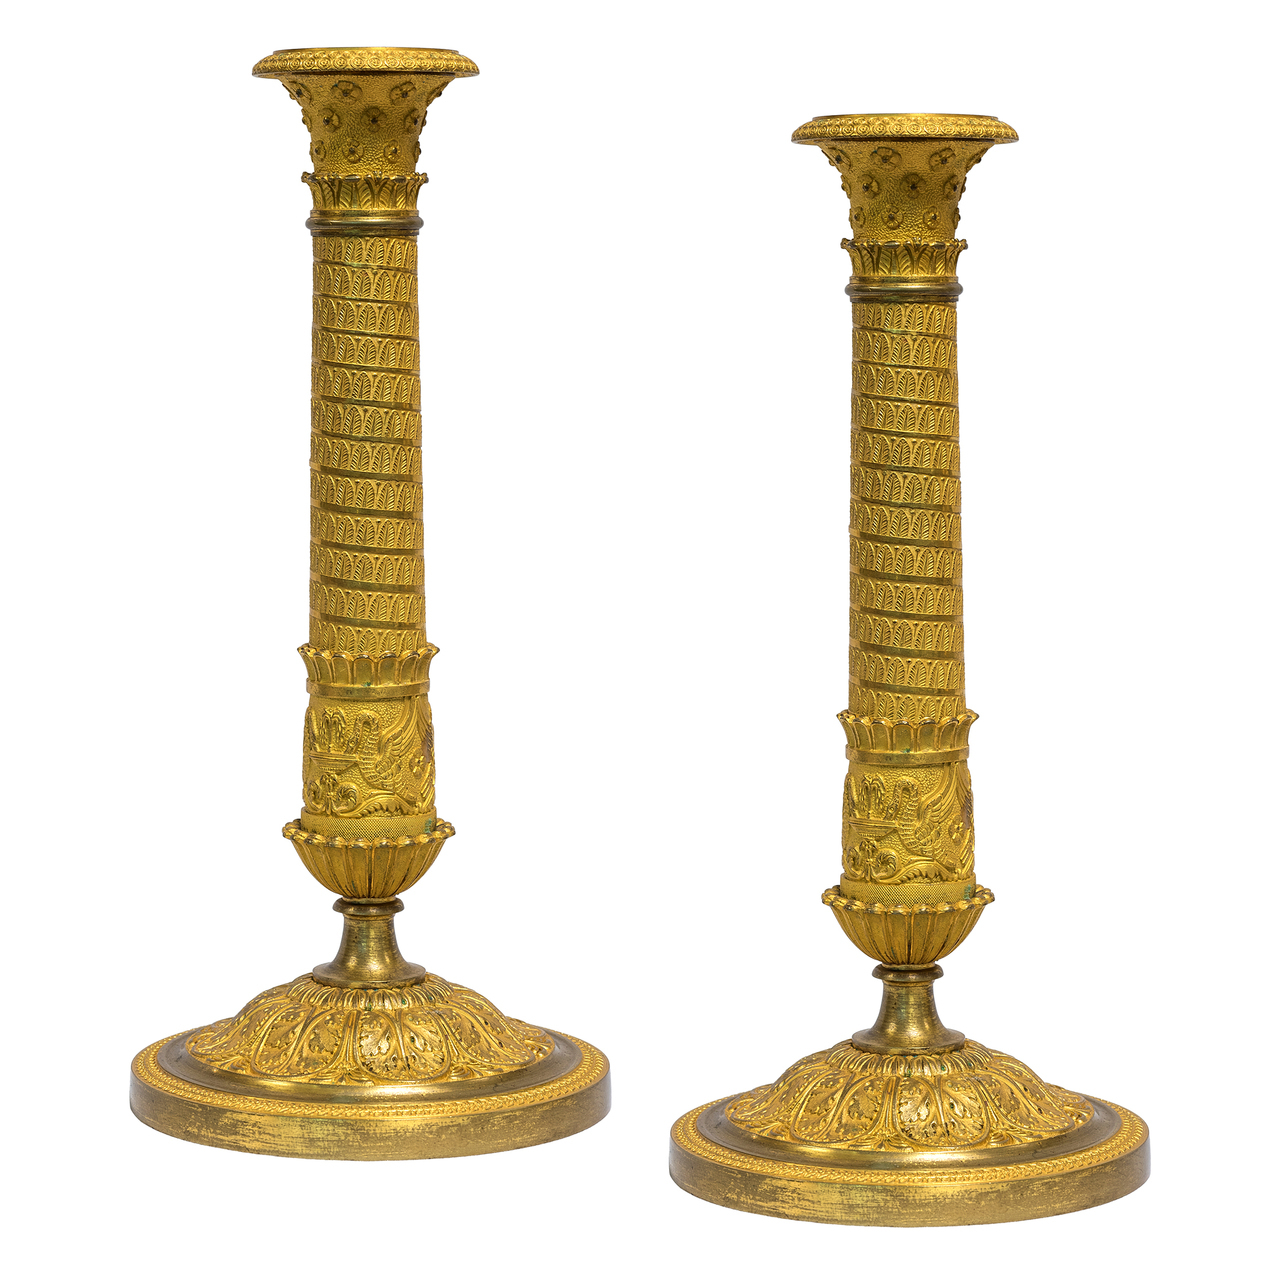 A Fine Quality Pair of French Empire Gilt Bronze Candlesticks